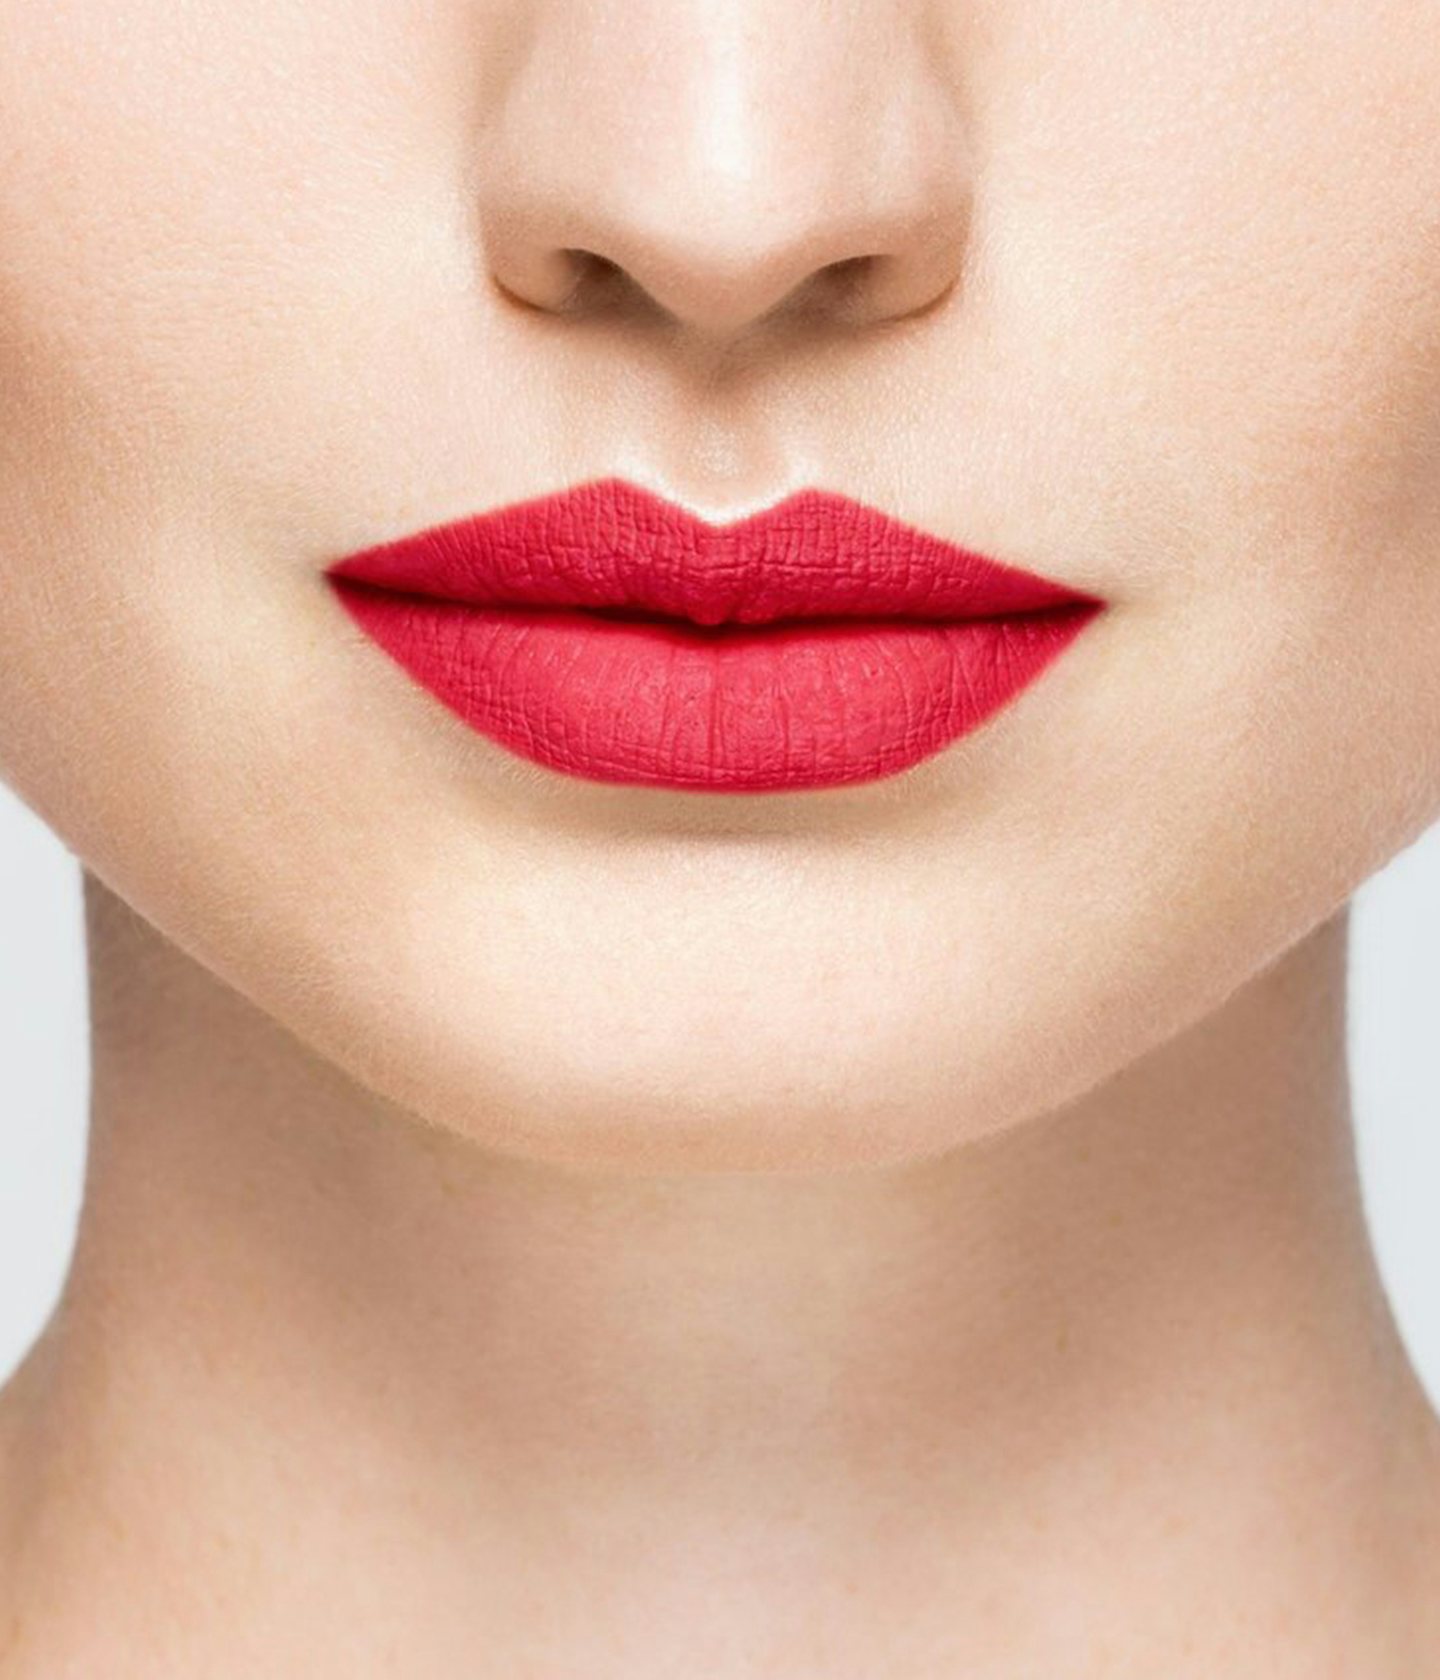 La bouche rouge 70s America lipstick shade on the lips of a fair skin model